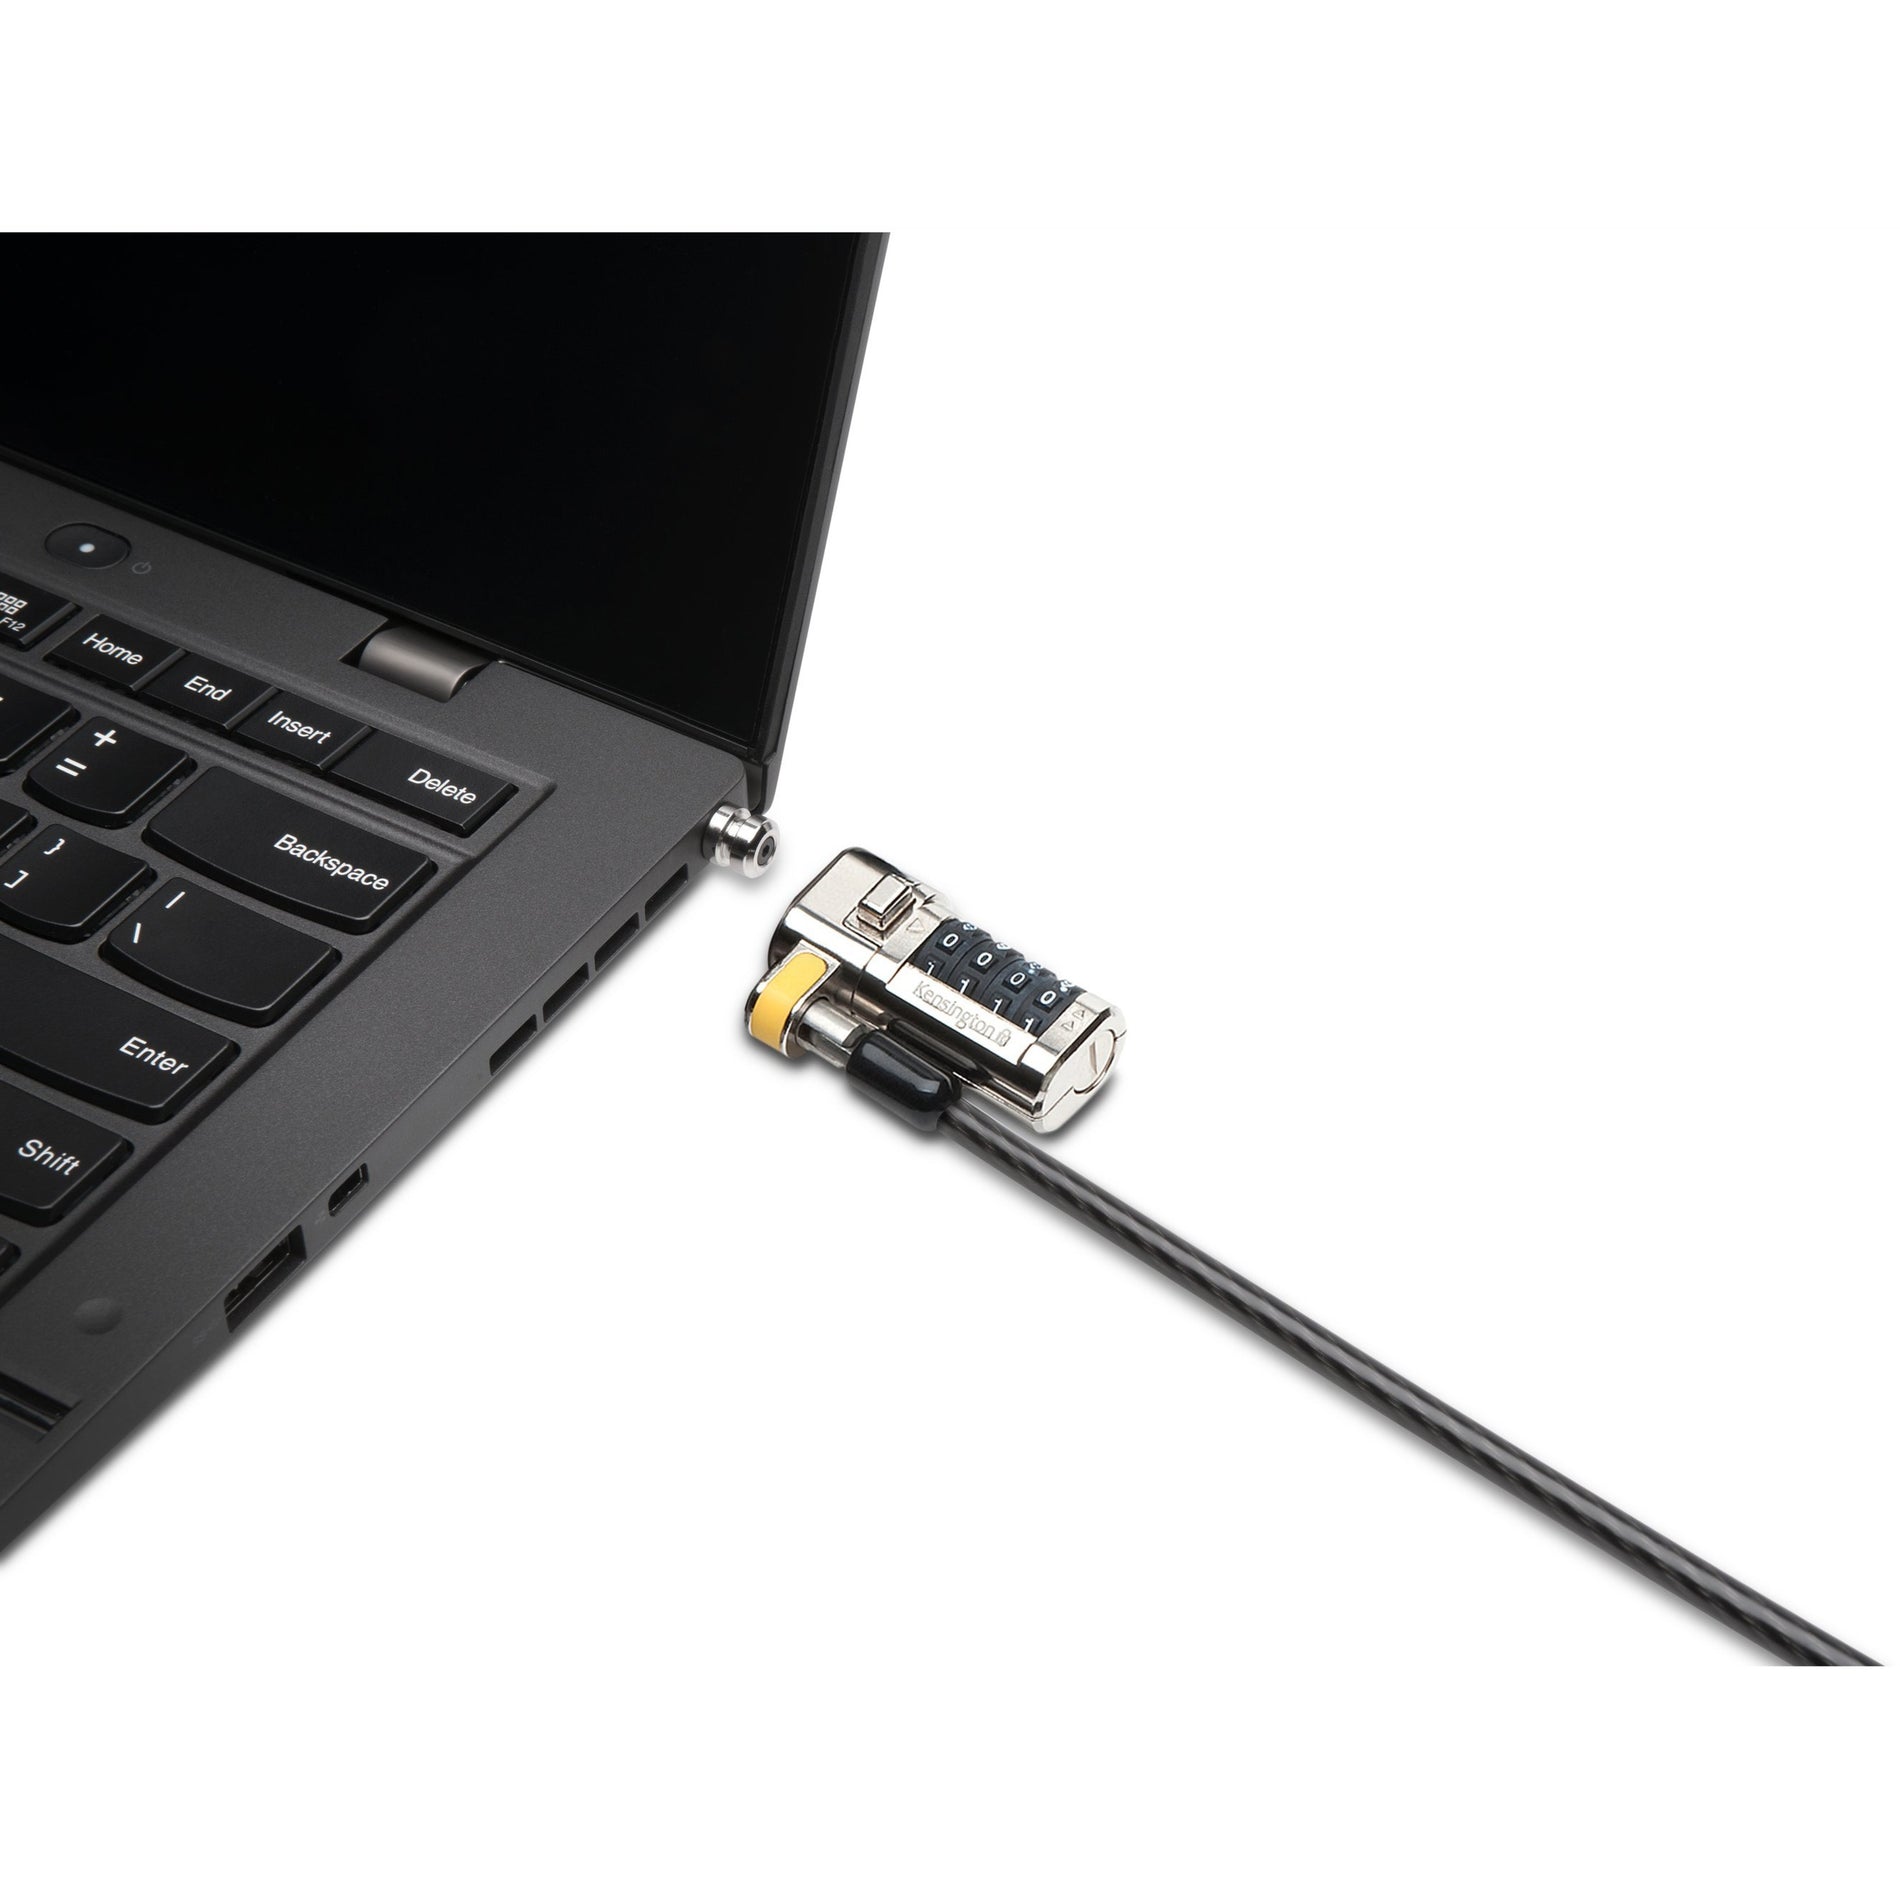 Kensington K67936WW ClickSafe Combination Laptop Lock, 6 ft Cable Length, 4-digit Locking Combination